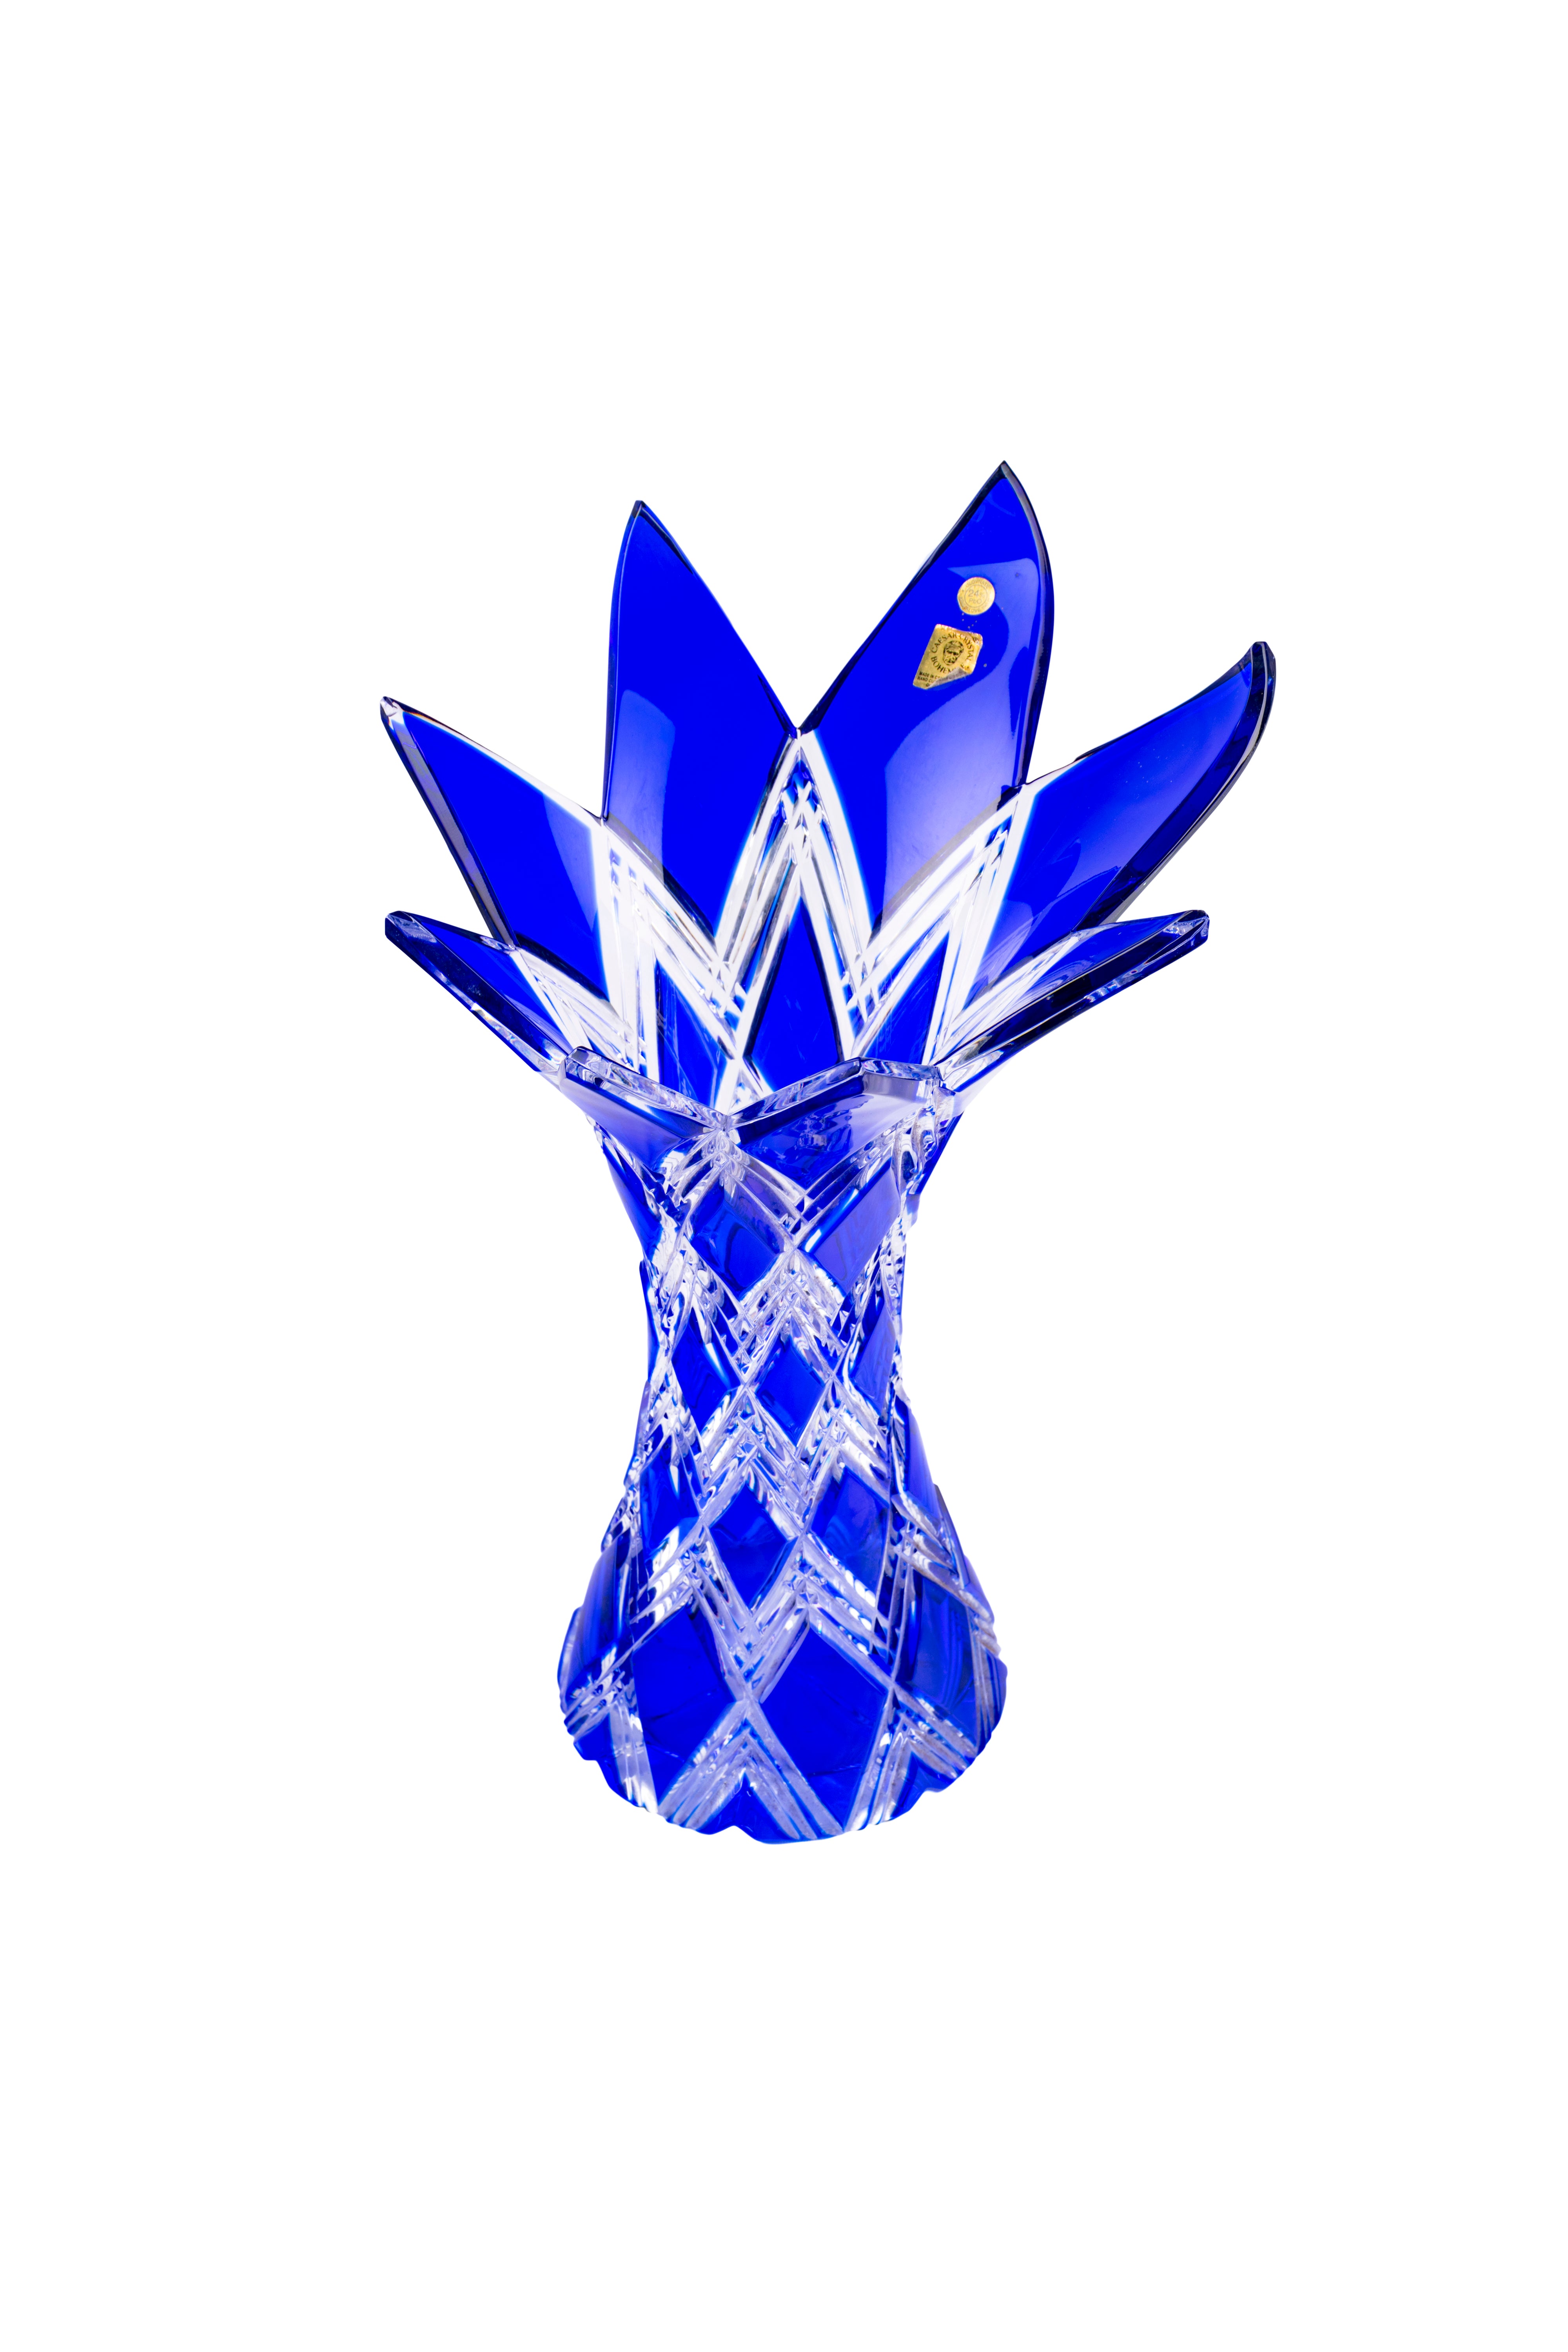 CAESAR CRYSTAL BOHEMIAE - Blue Roman Vase - Starry Night Wonder